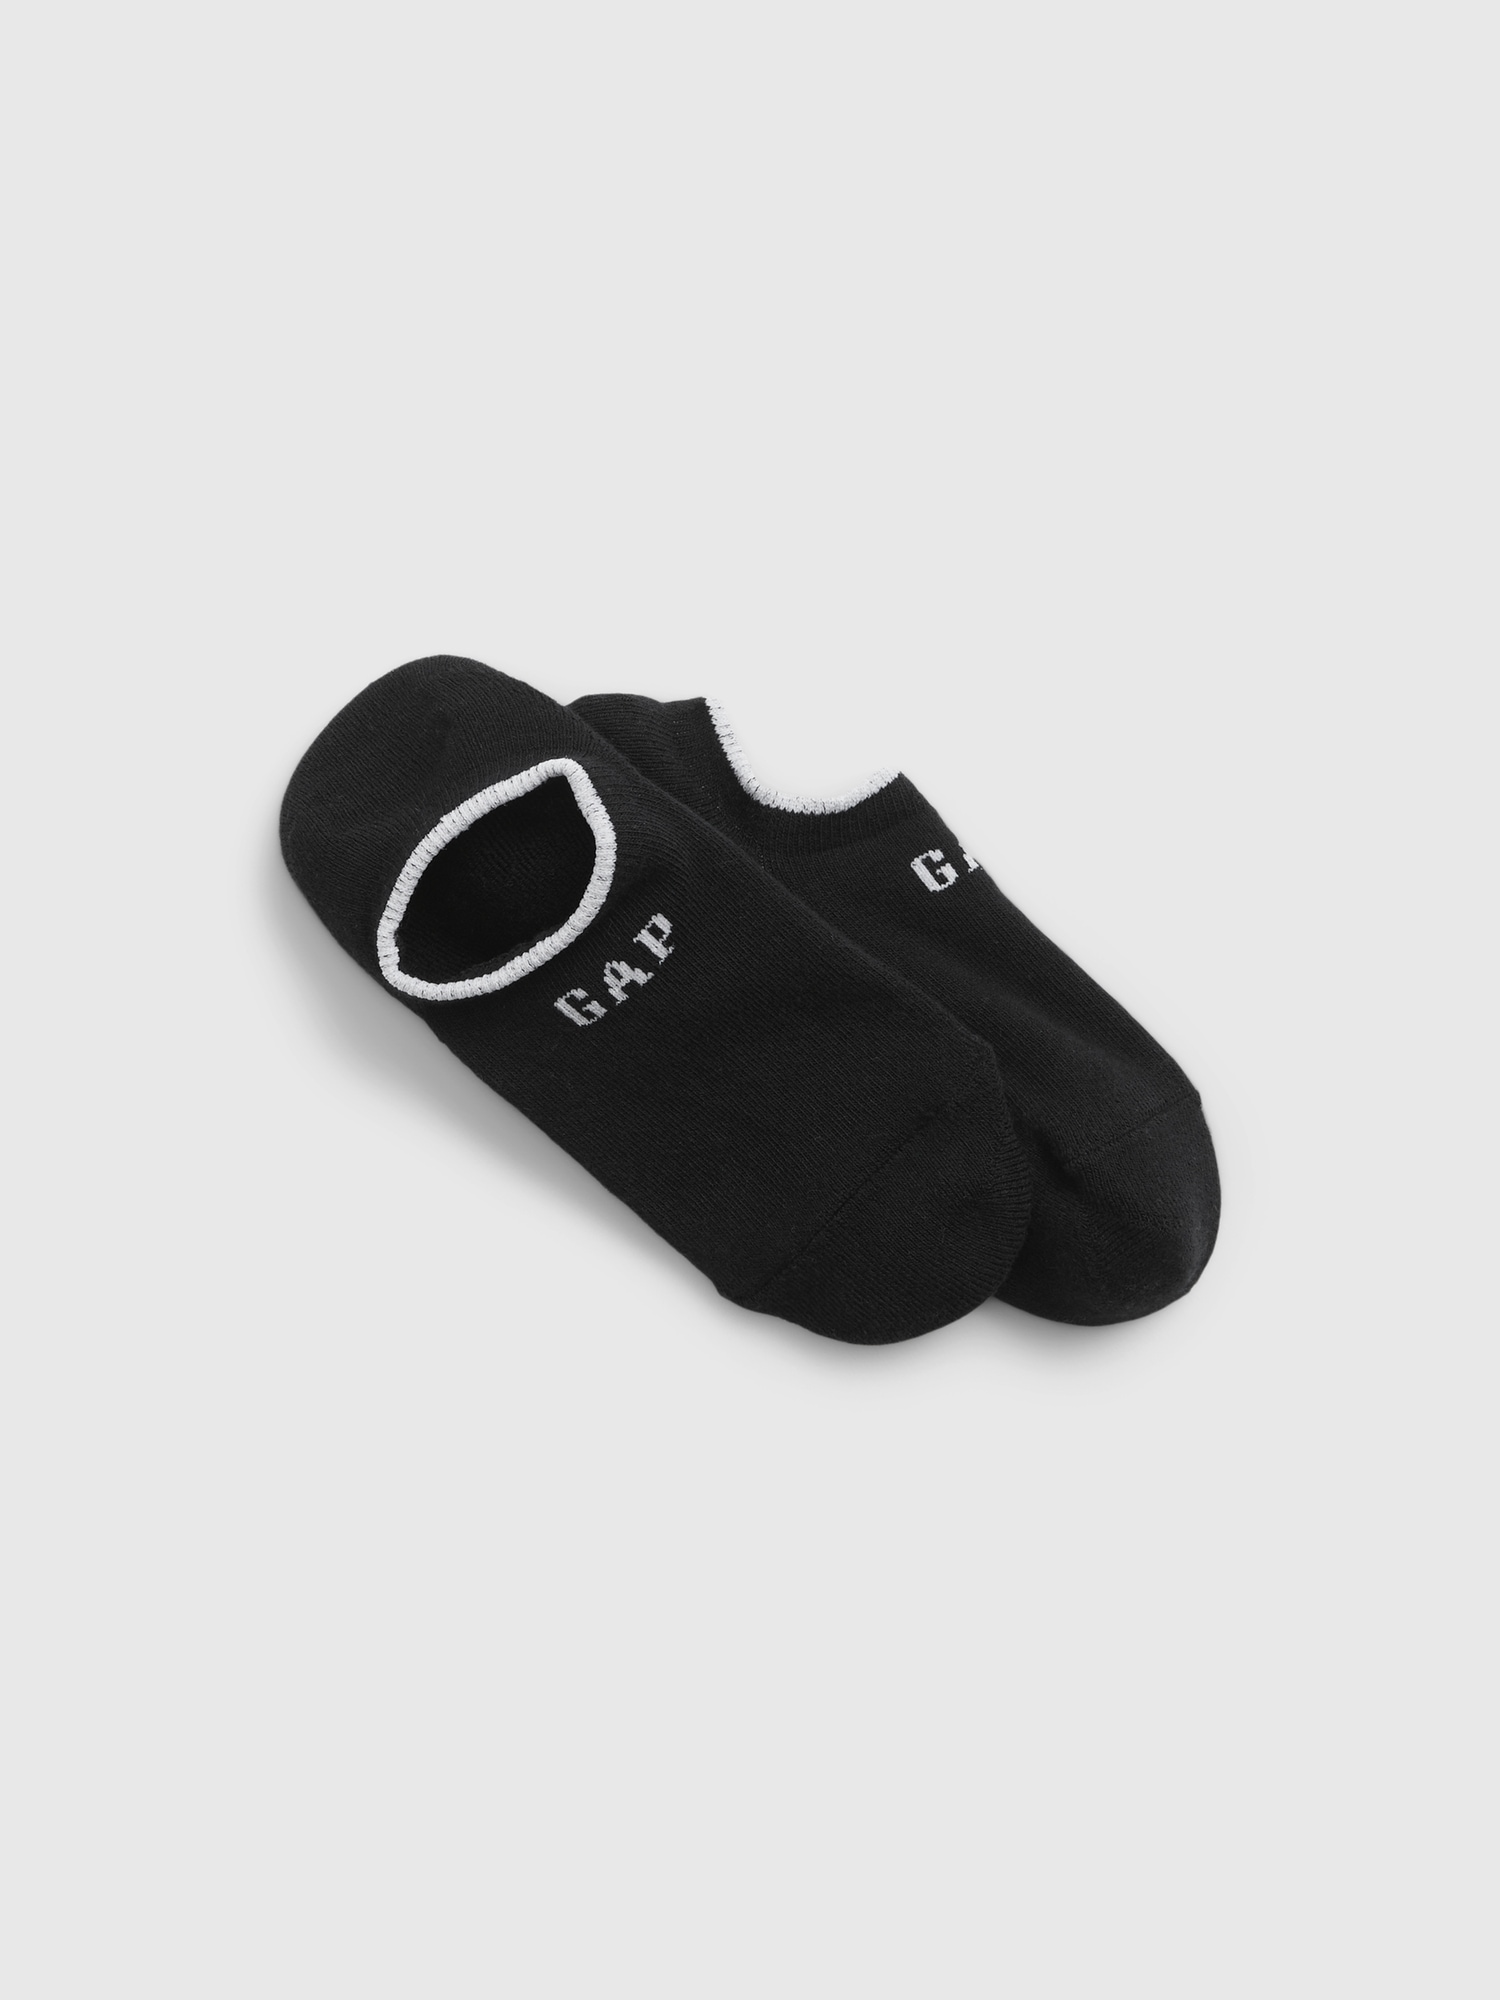 Gap Unisex Athletic Ankle Socks